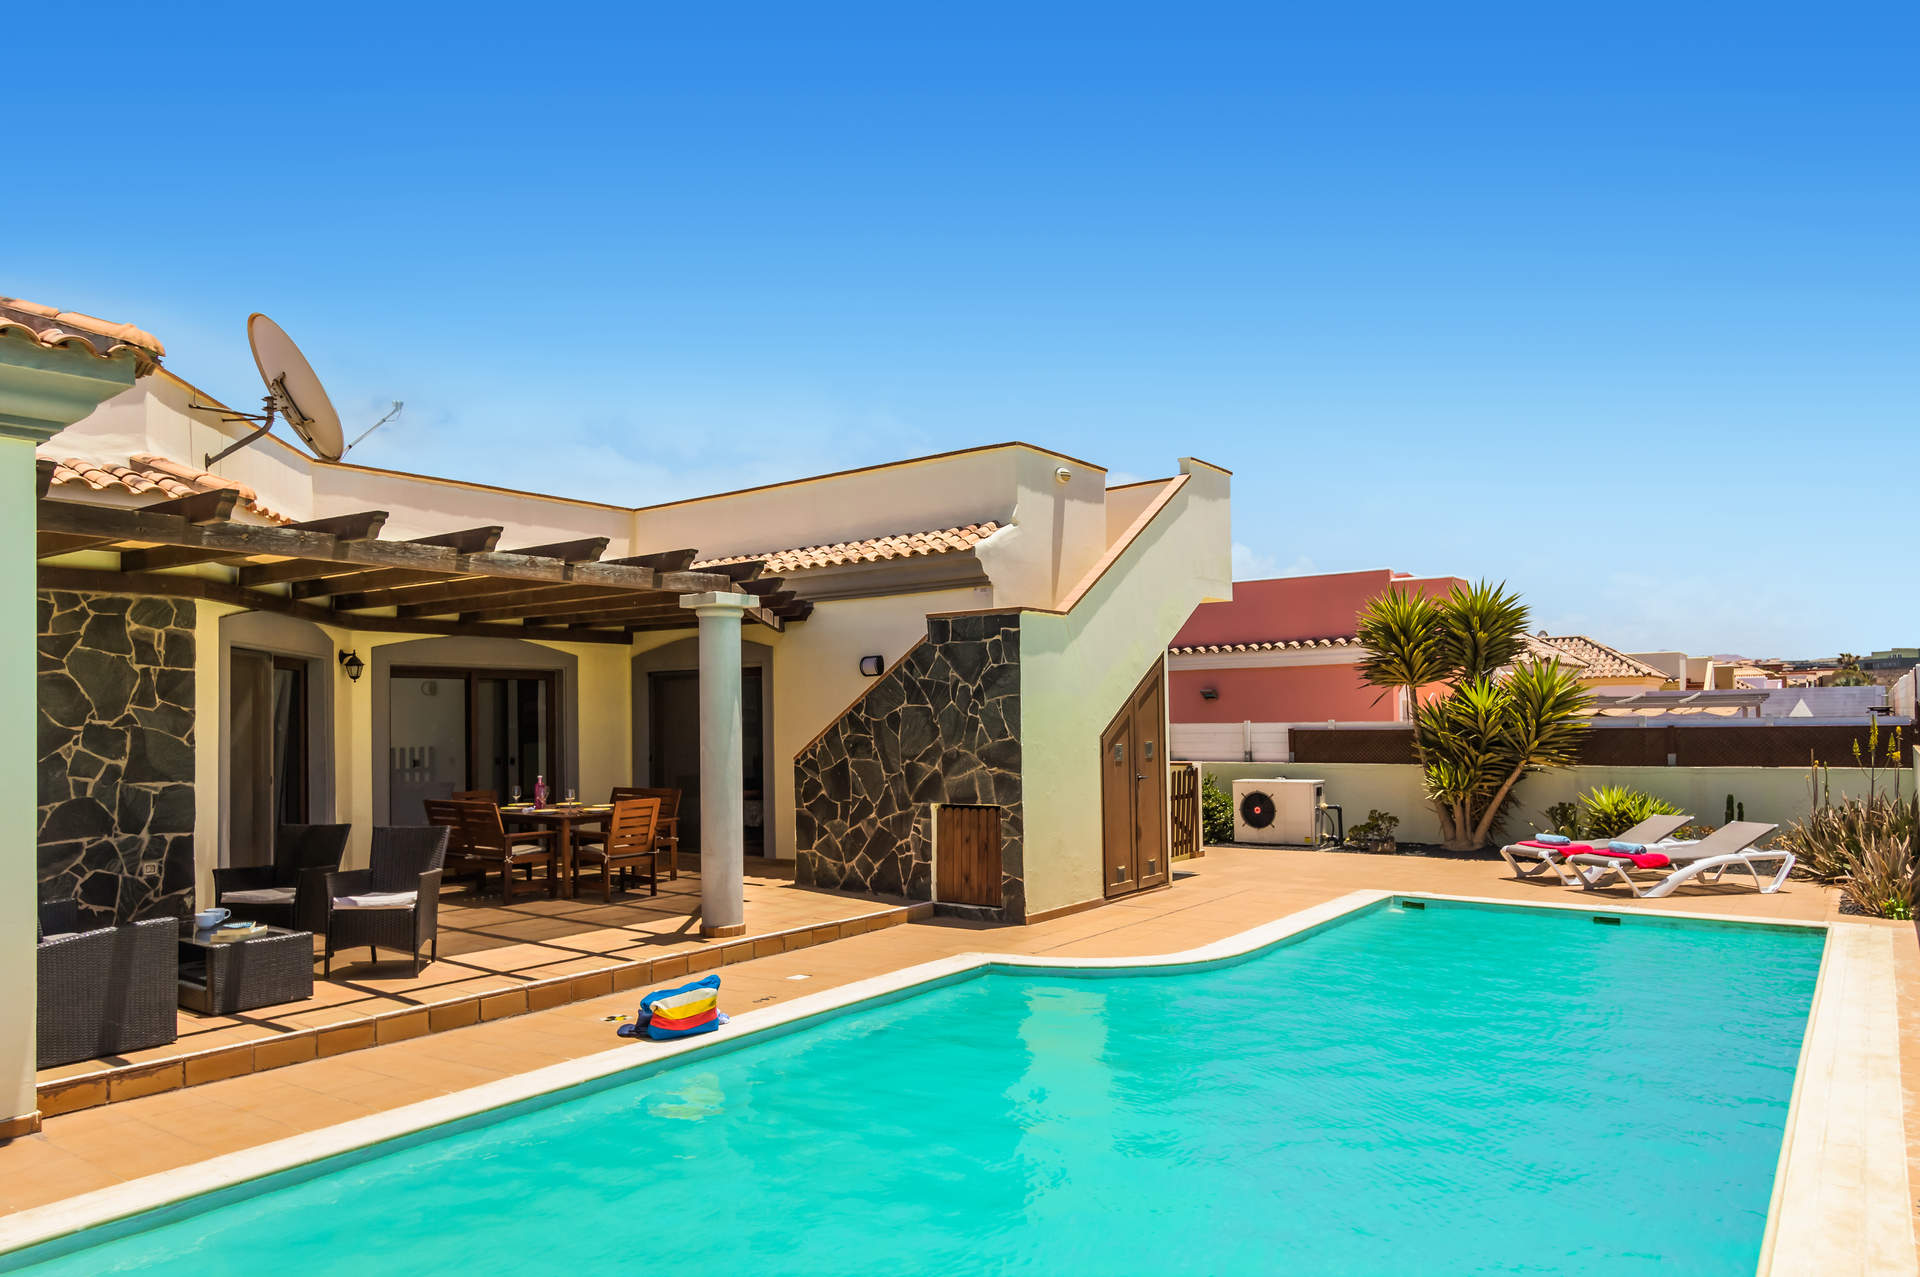 Villa Maca in Corralejo, Fuerteventura - Houses for Rent in Corralejo,  Canarias, Spain - Airbnb